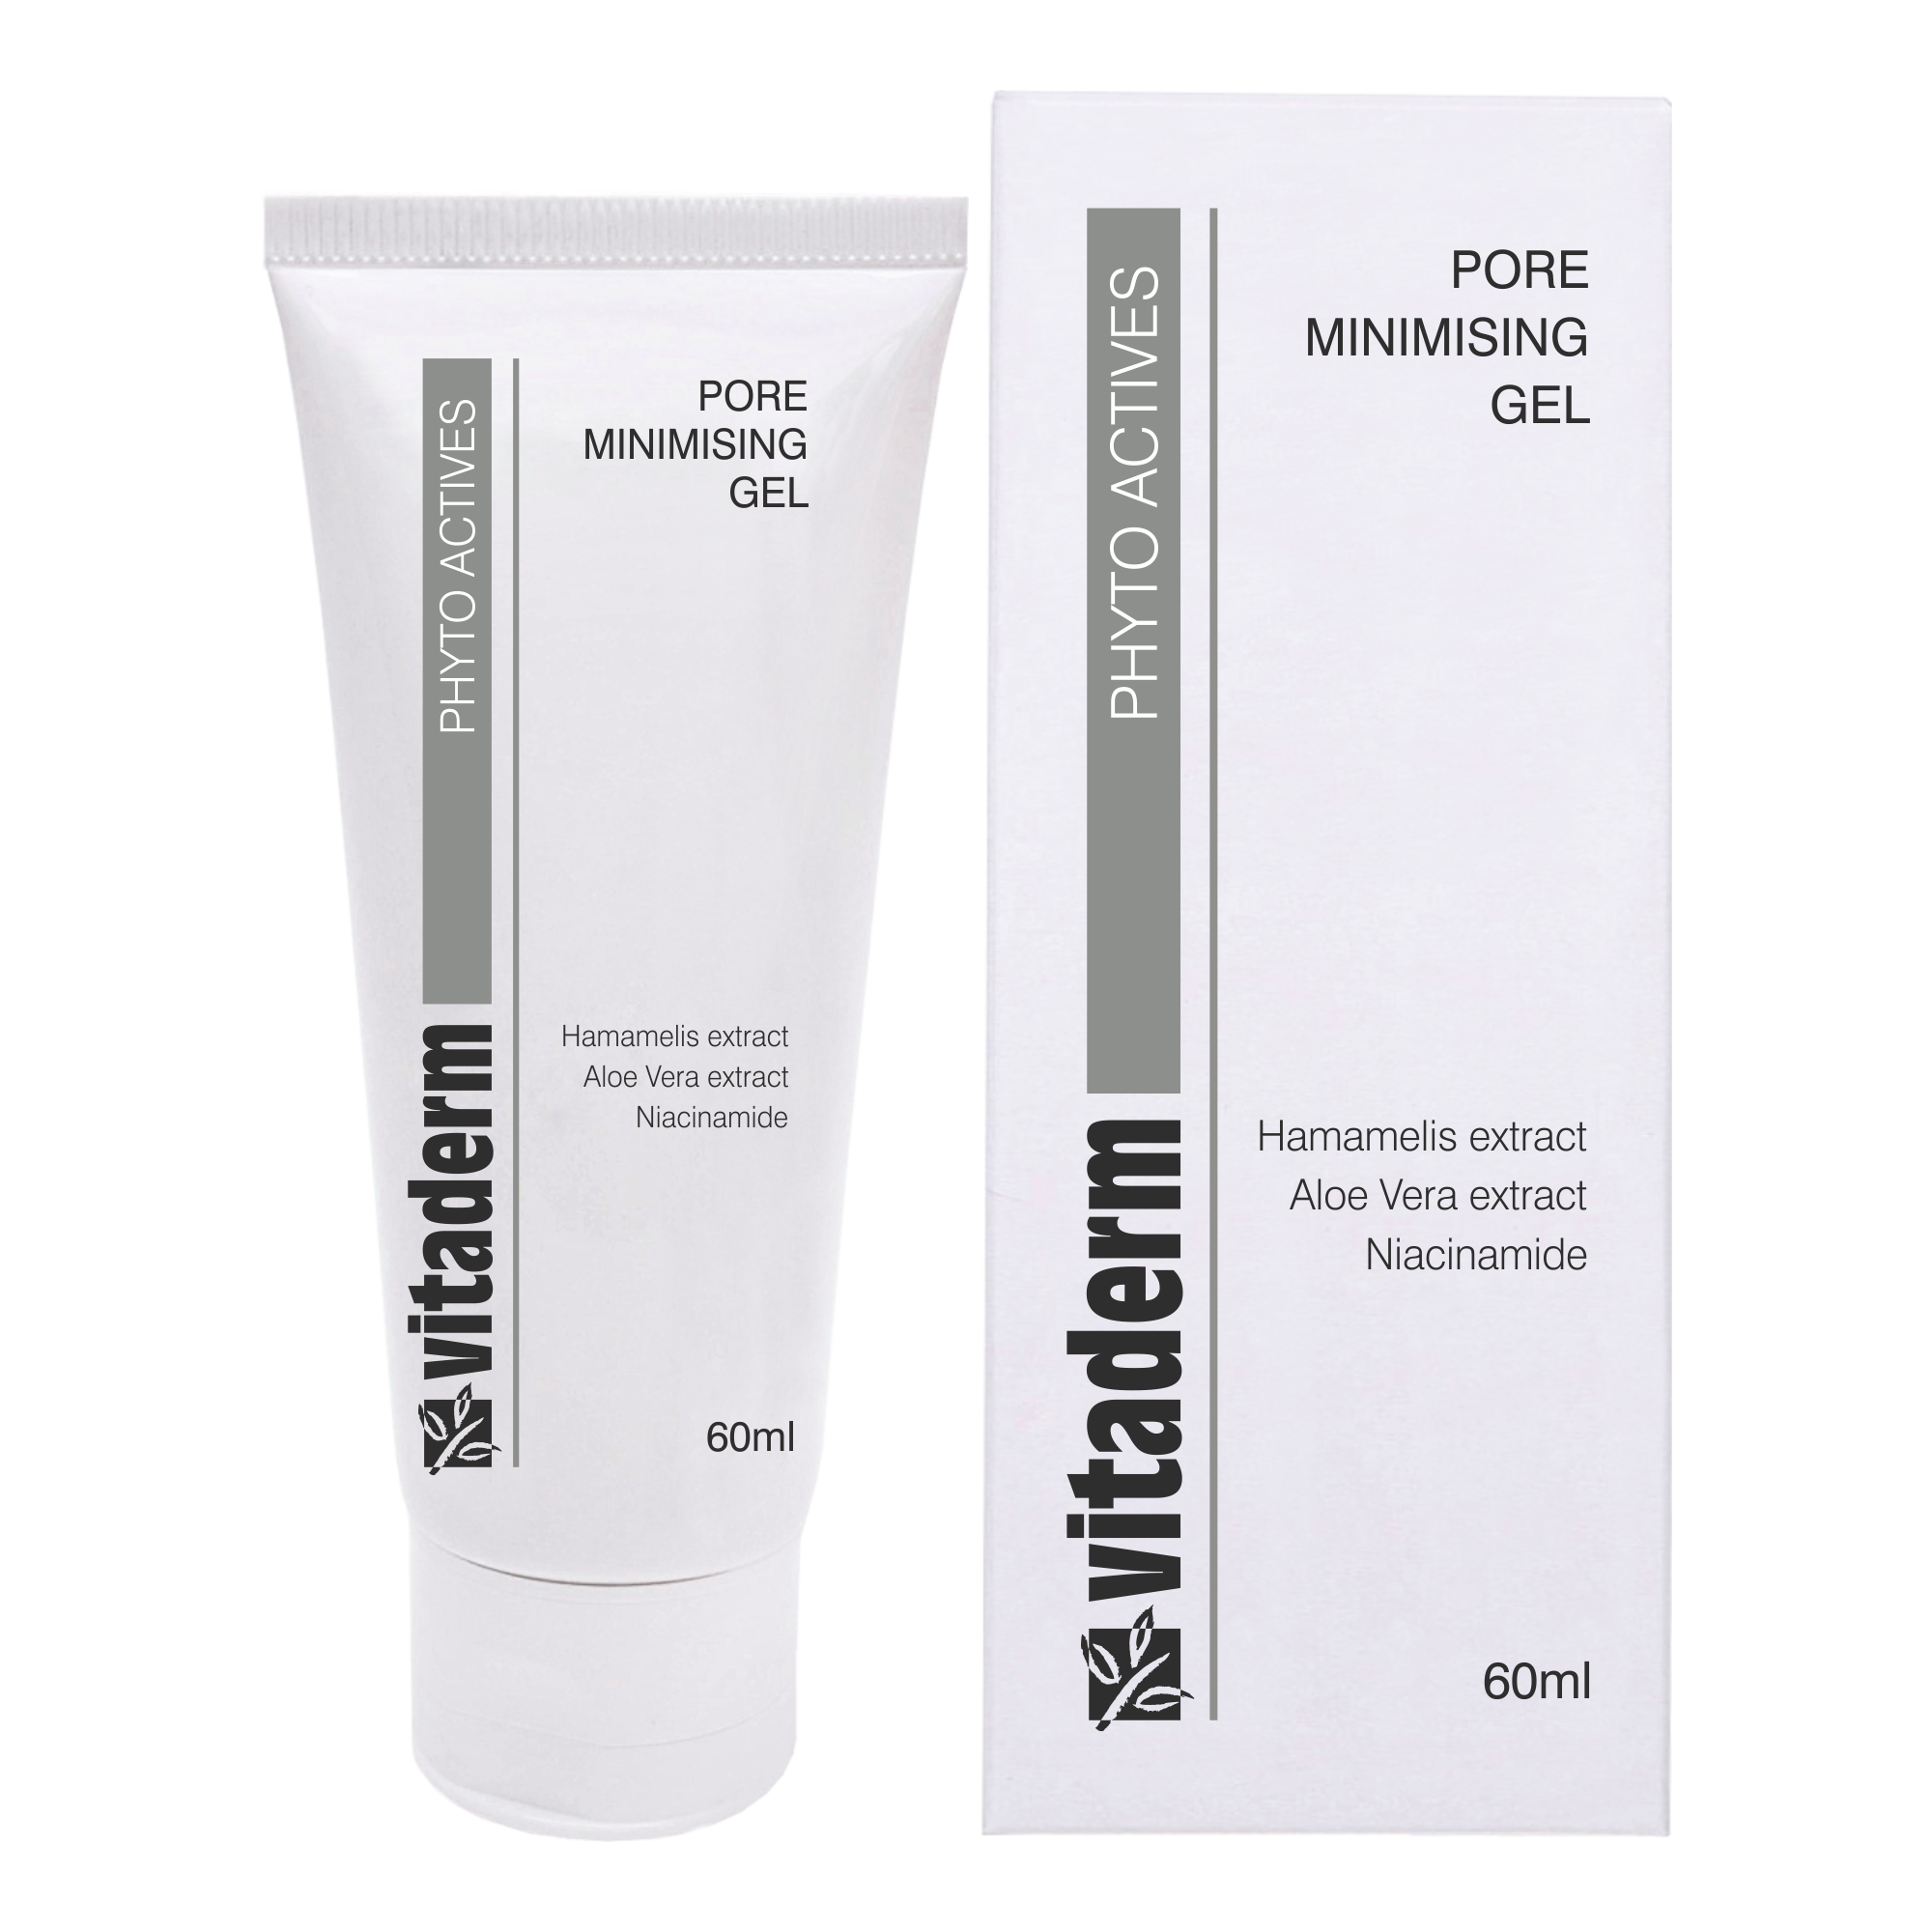 moisturisers-pore-minimising-gel